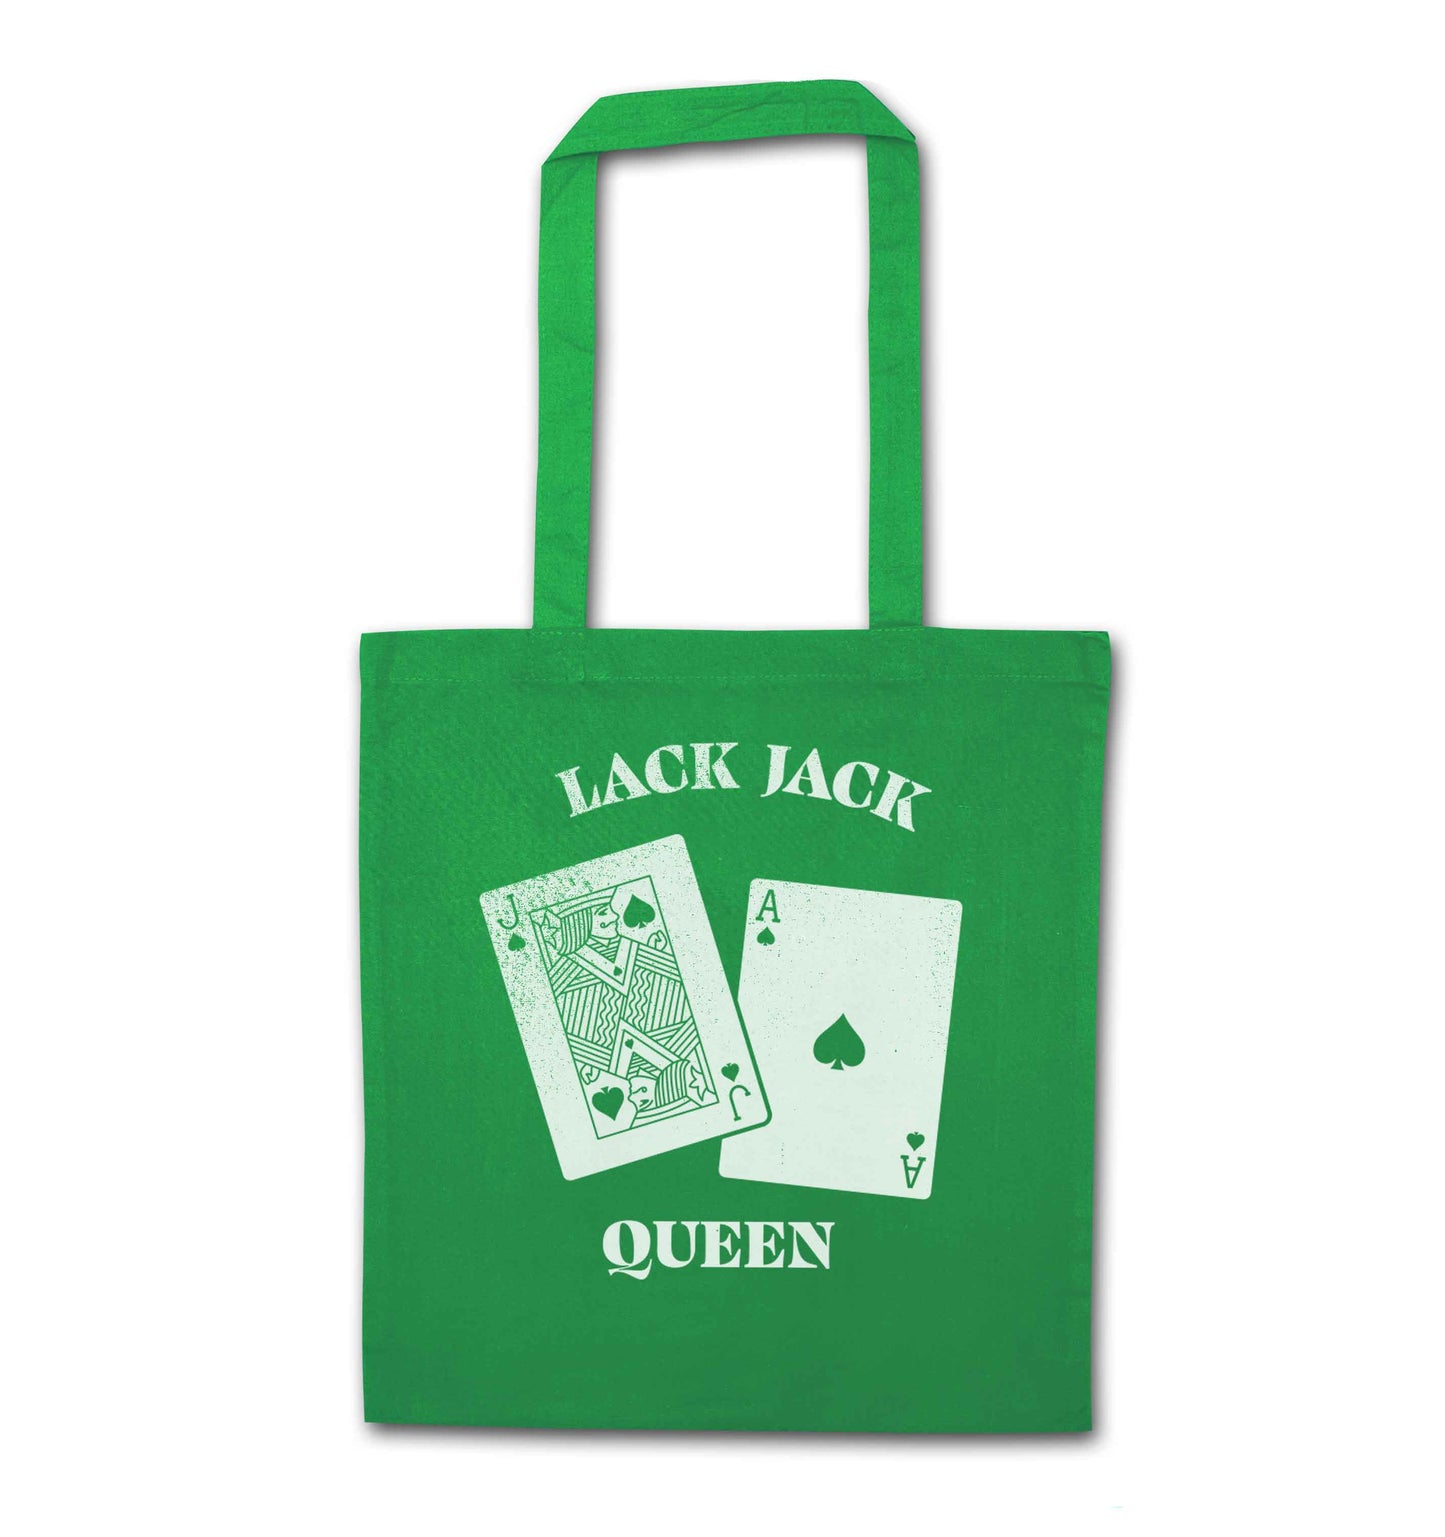 Blackjack queen green tote bag